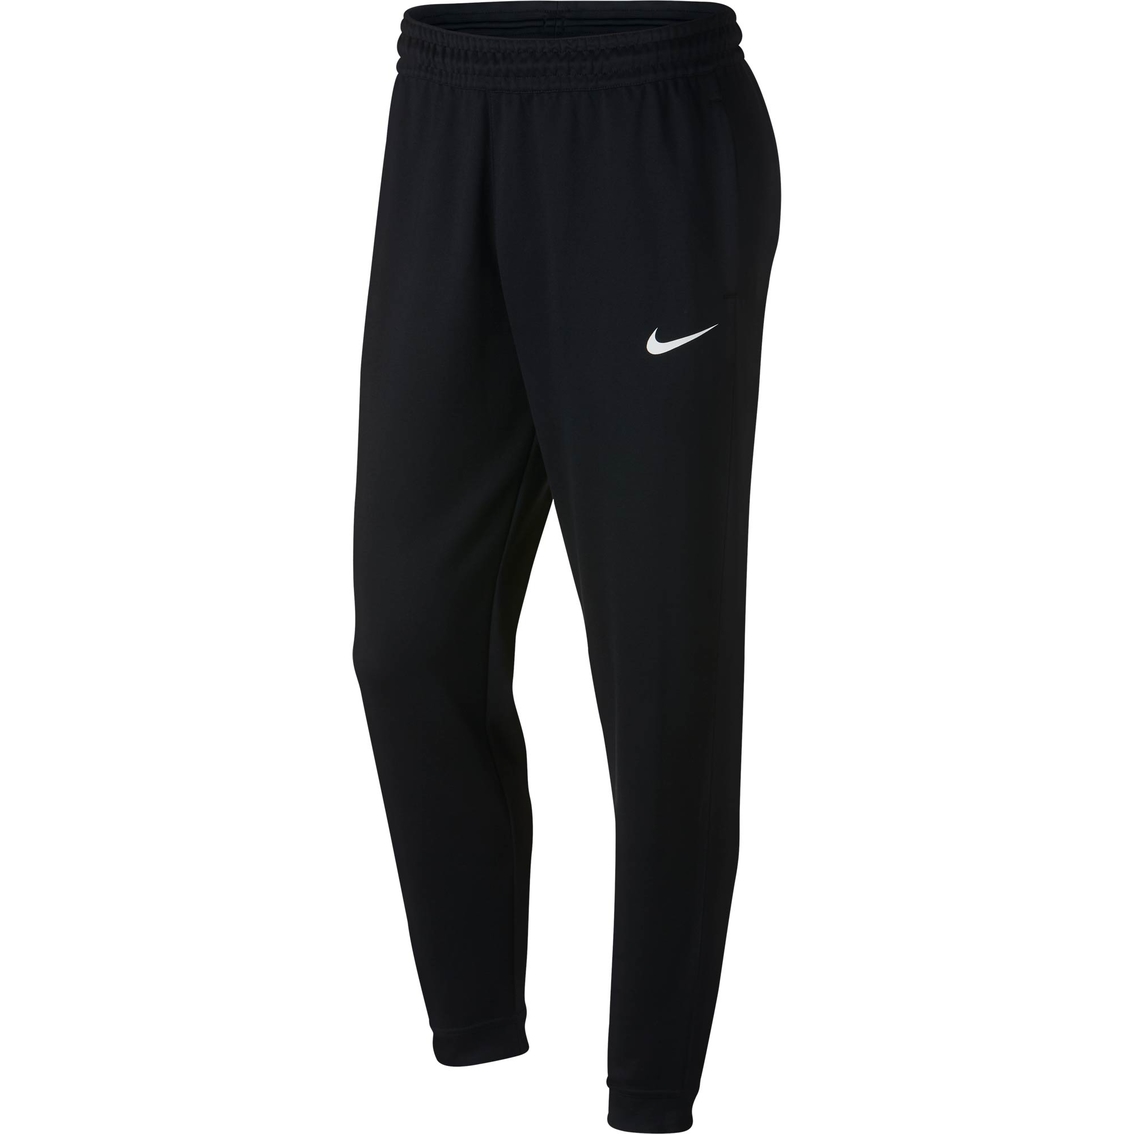 Nike Spotlight Men's Basketball Pants 